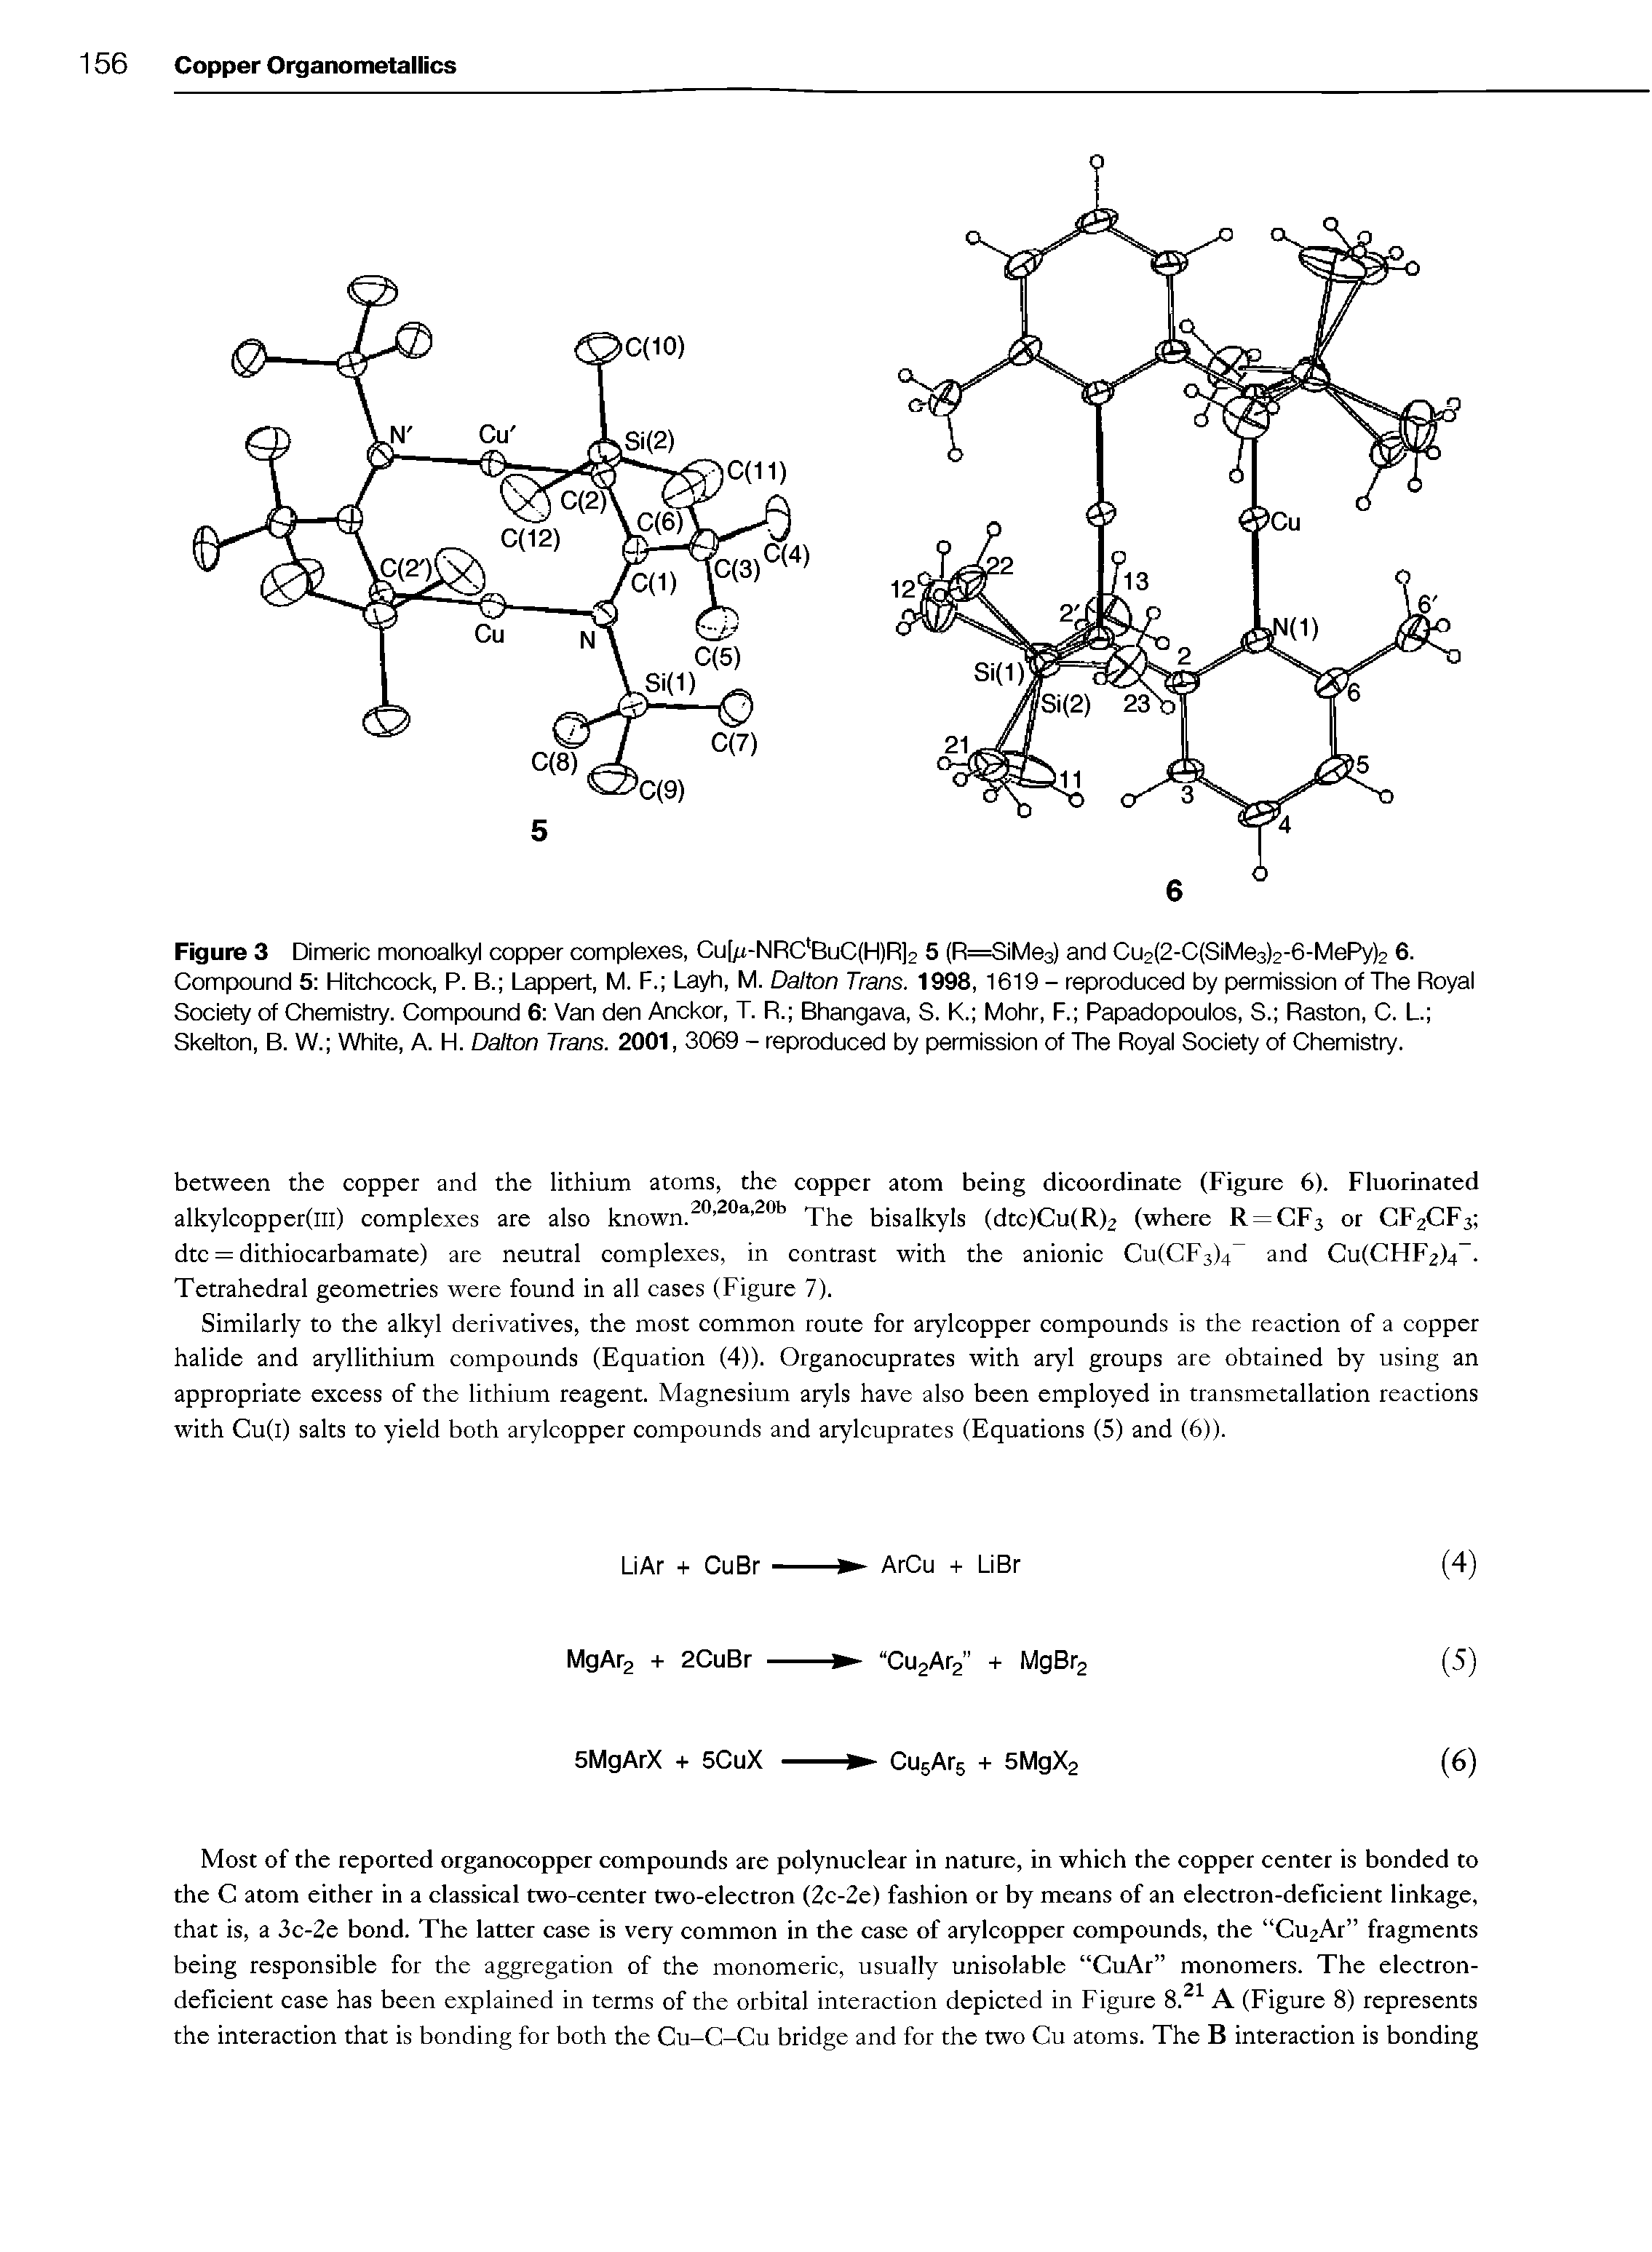 Figure 3 Dimeric monoalkyl copper complexes, Cu[/j-NRC BuC(H)R]2 5 (R=SiMe3) and Cu2(2-C(SiMe3)2-6-MePy)2 6. Compound 5 Hitchcock, P. B. Lappert, M. F. Layh, M. Dalton Trans. 1998, 1619 - reproduced by permission of The Royal Society of Chemistry. Compound 6 Van den Anckor, T. R. Bhangava, S. K. Mohr, F. Papadopoulos, S. Raston, C. L. Skelton, B. W. White, A. H. Dalton Trans. 2001, 3069 - reproduced by permission of The Royal Society of Chemistry.